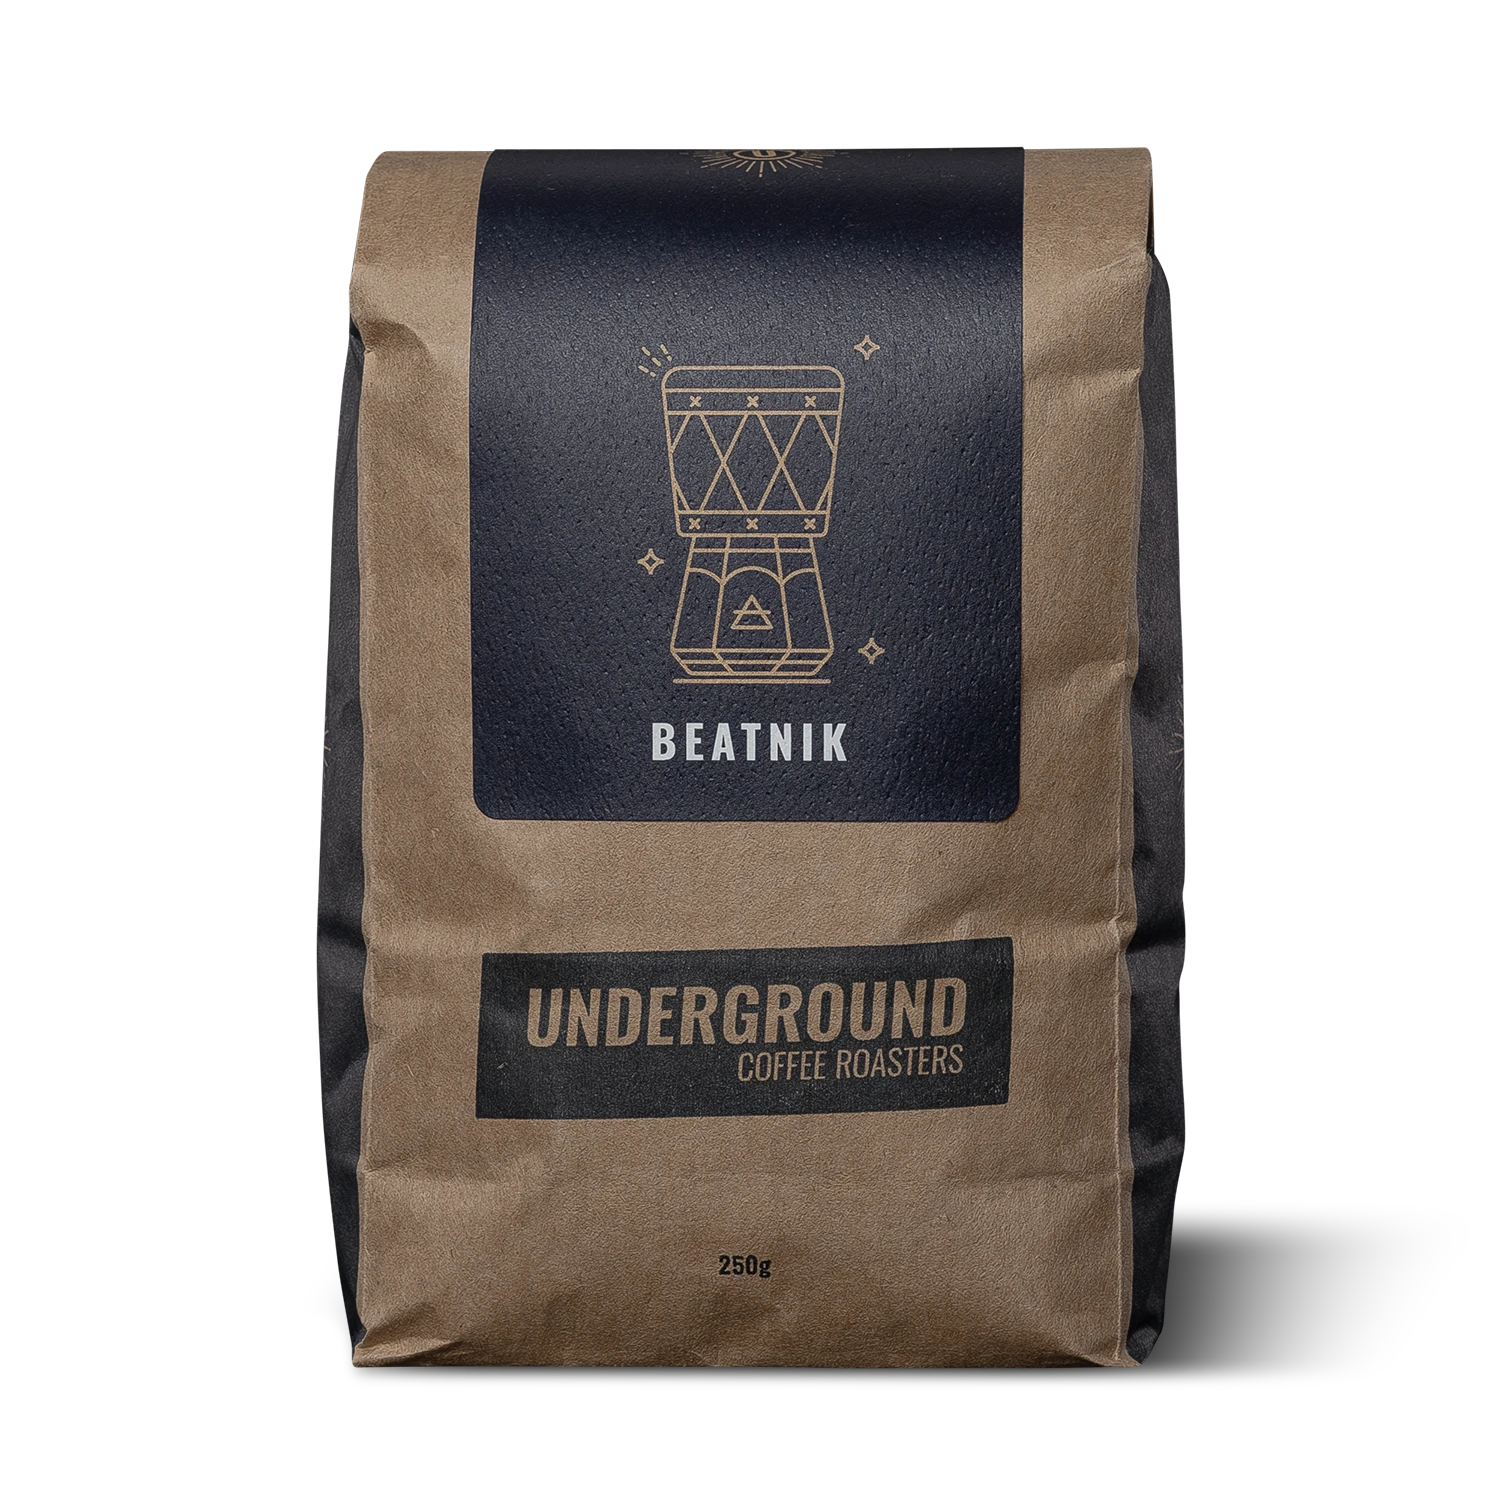 Underground Coffee Roasters Beatnik Coffee Blend